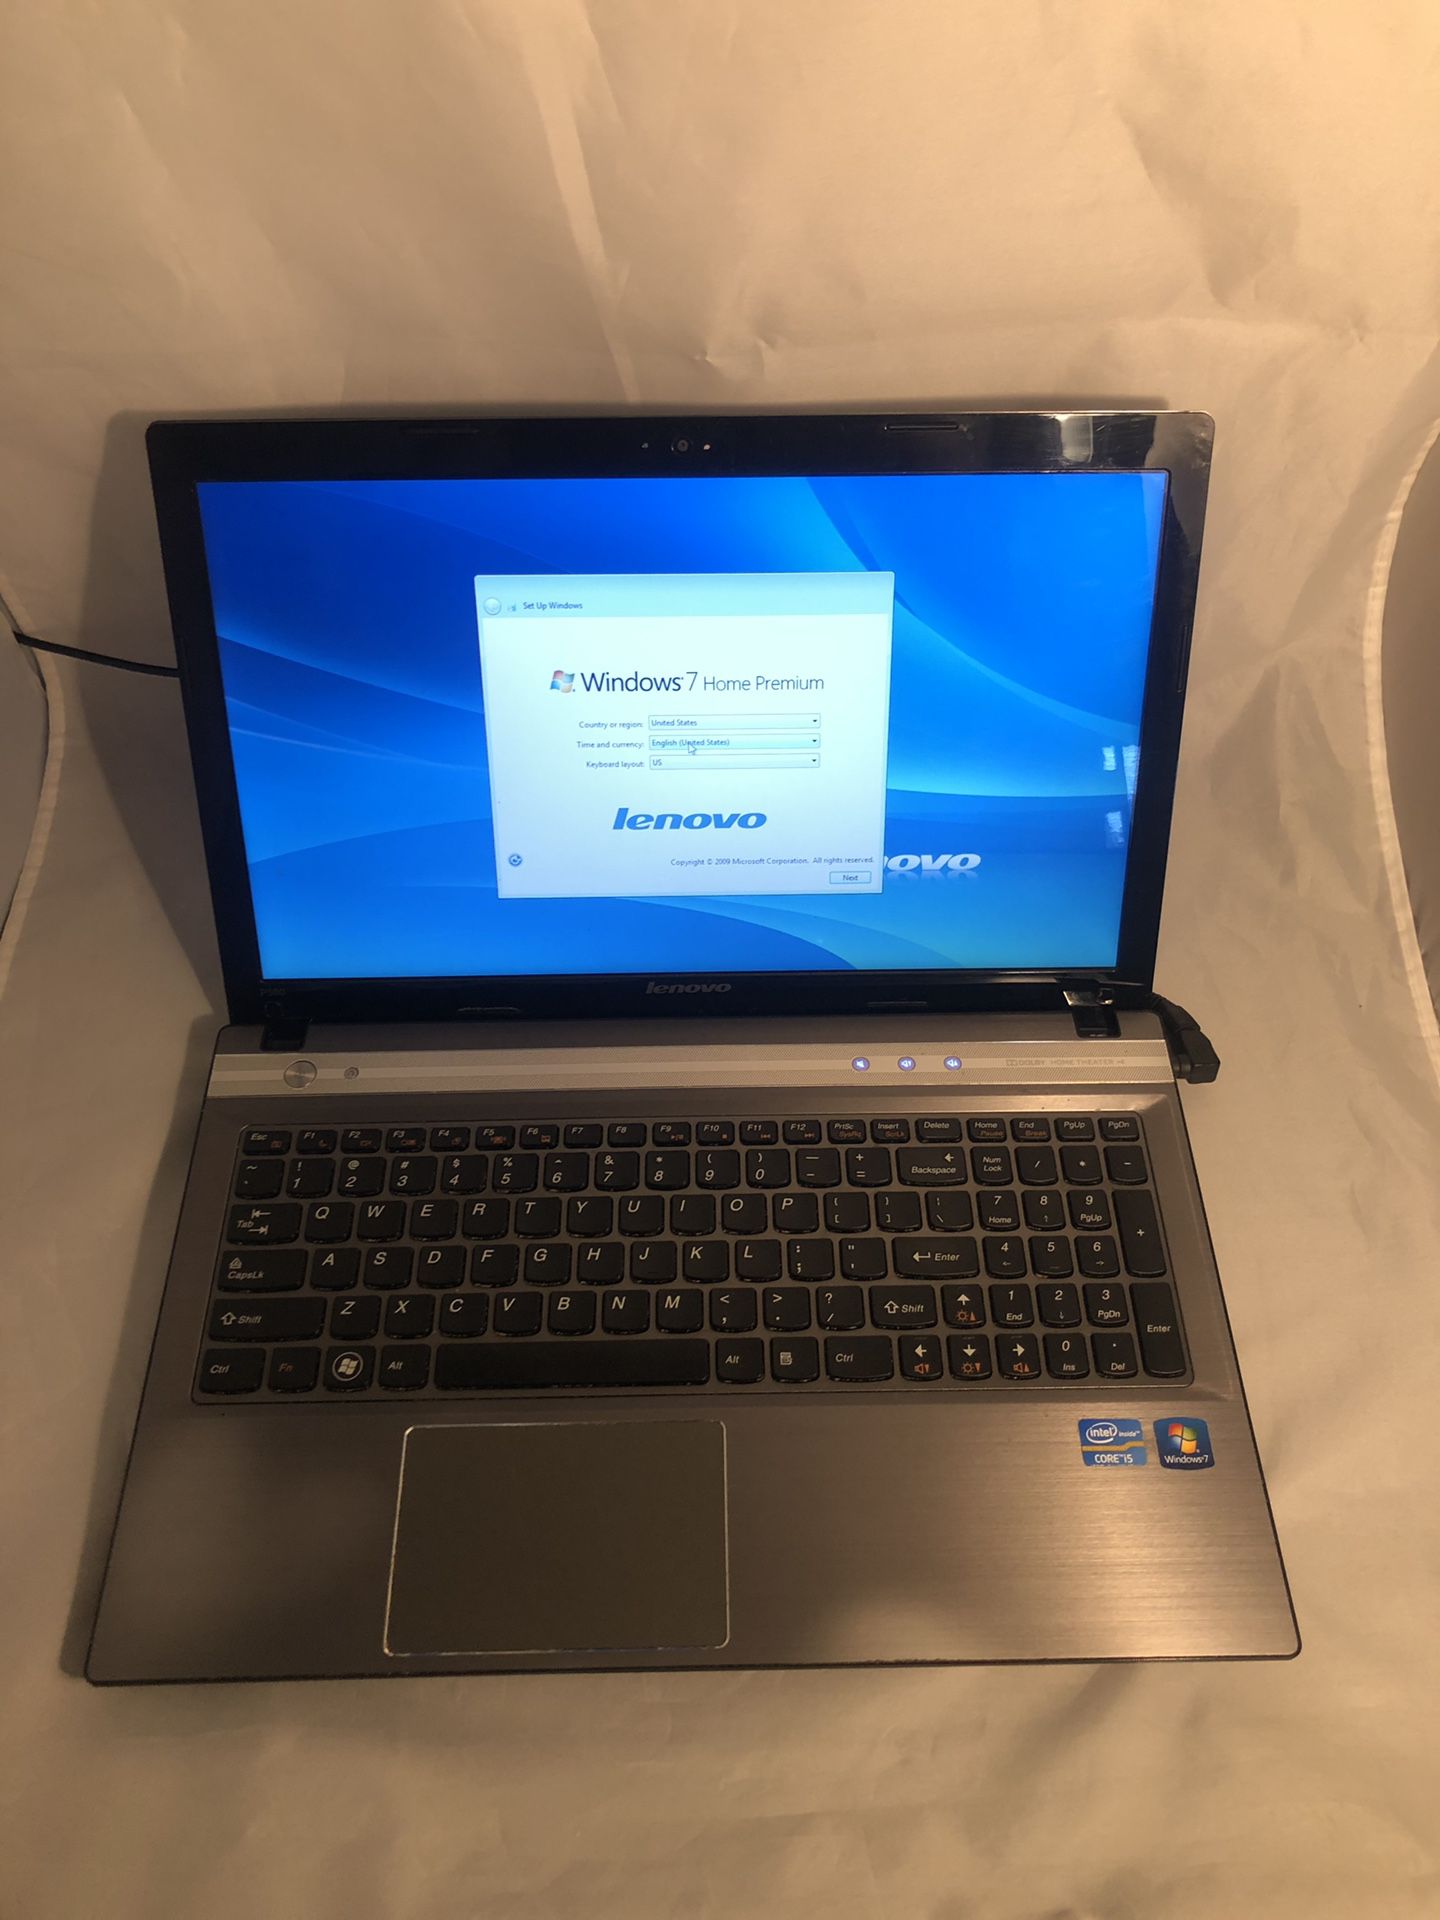 Lenovo Notebook Ideapad G580 15.6inch Dual Core 2020m 4gb 500gb Windows 7